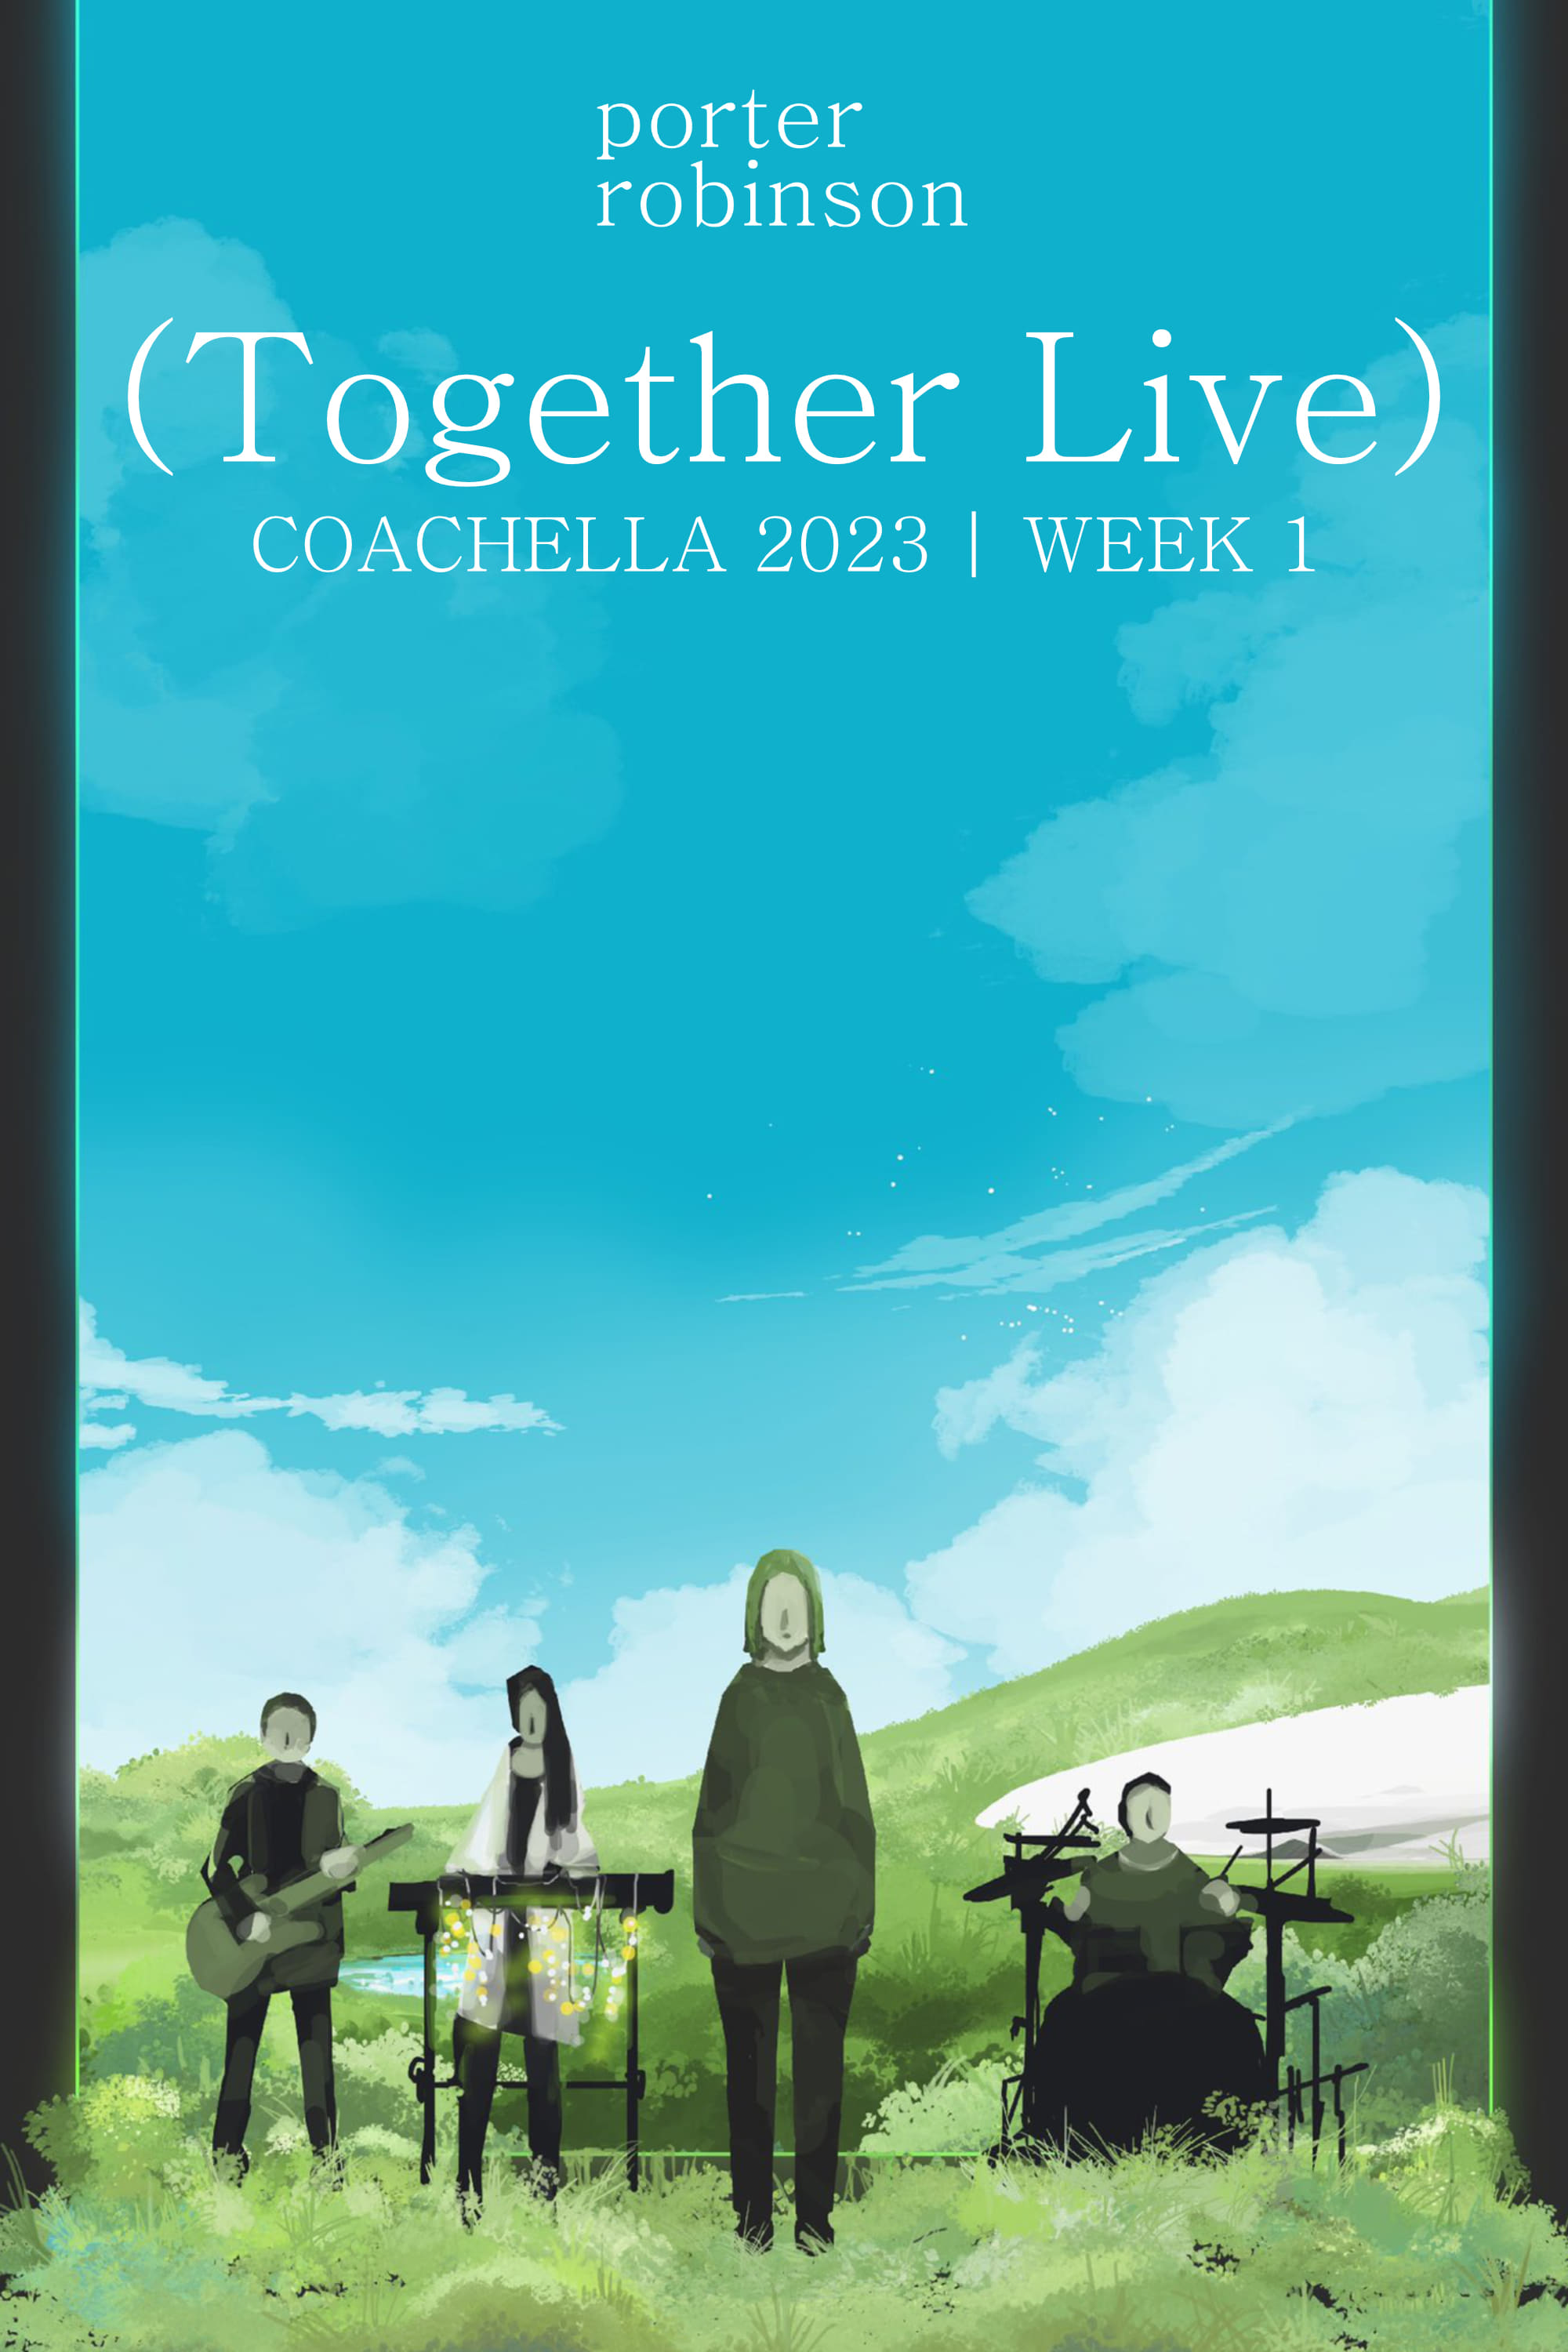 Porter Robinson: Together Live @ Coachella 2023 [Week 1]